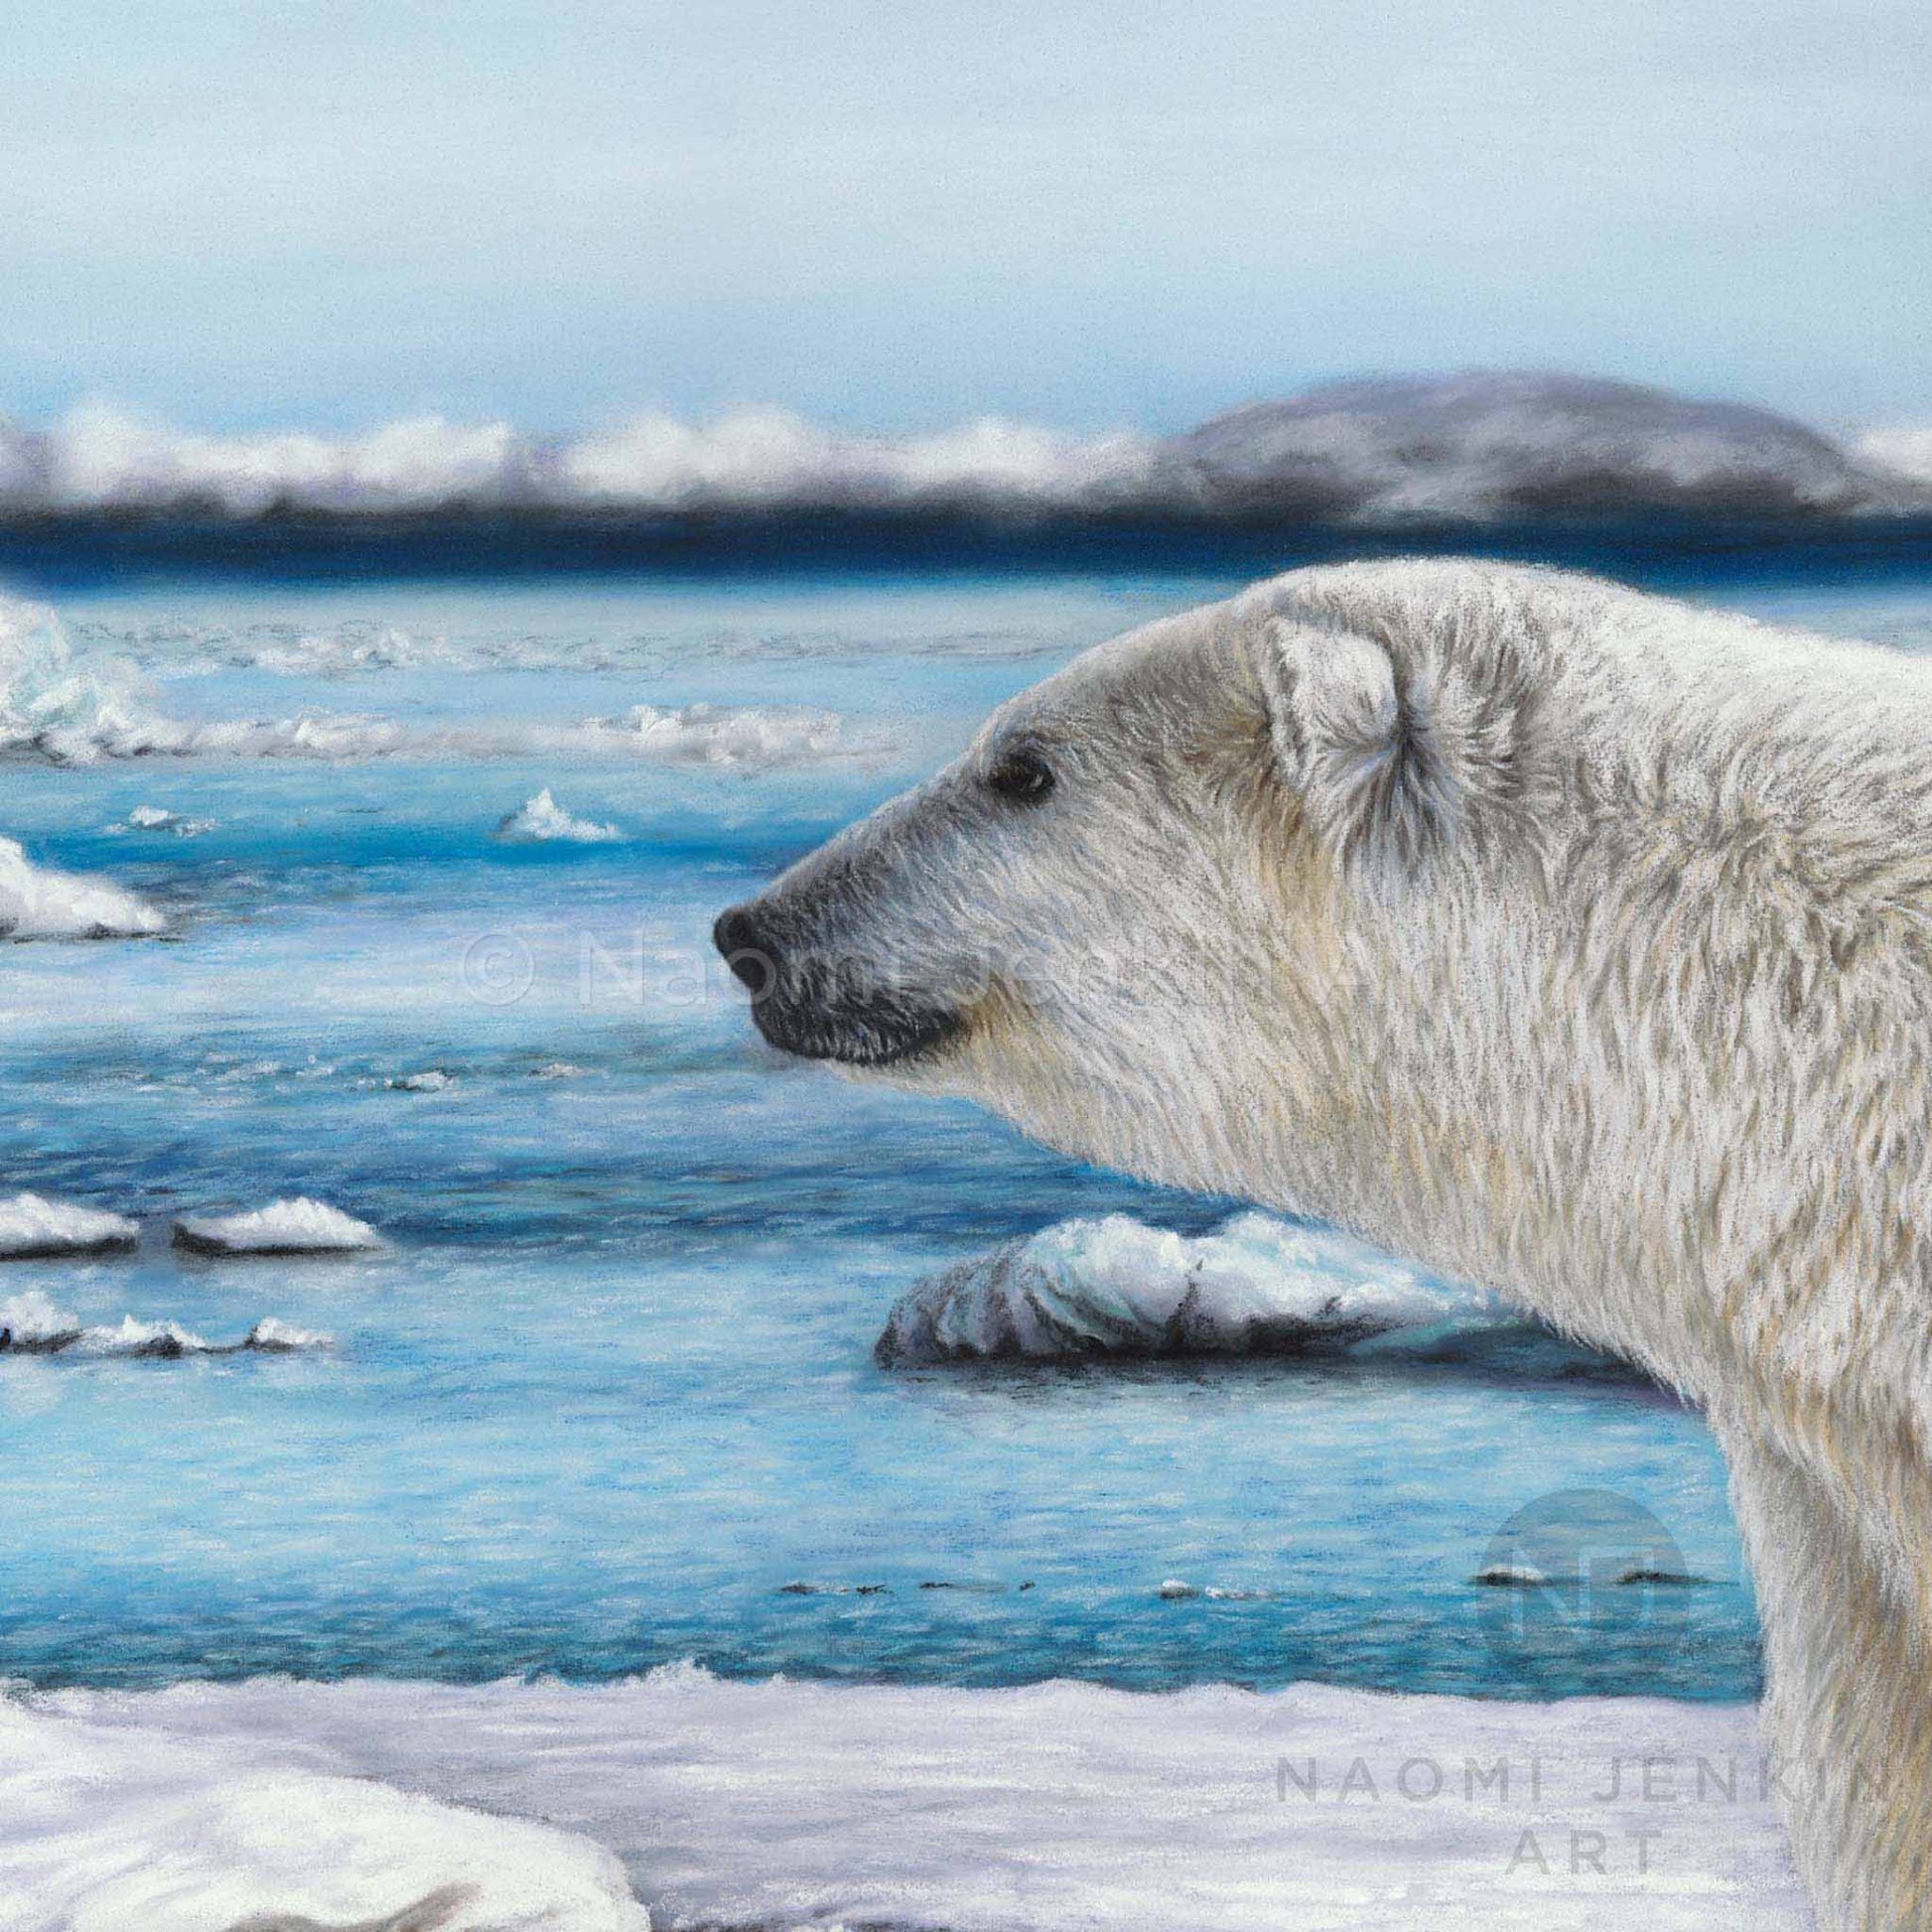 Close up of a polar bear mum from polar bear print 'On Thin Ice' by artist Naomi Jenkin